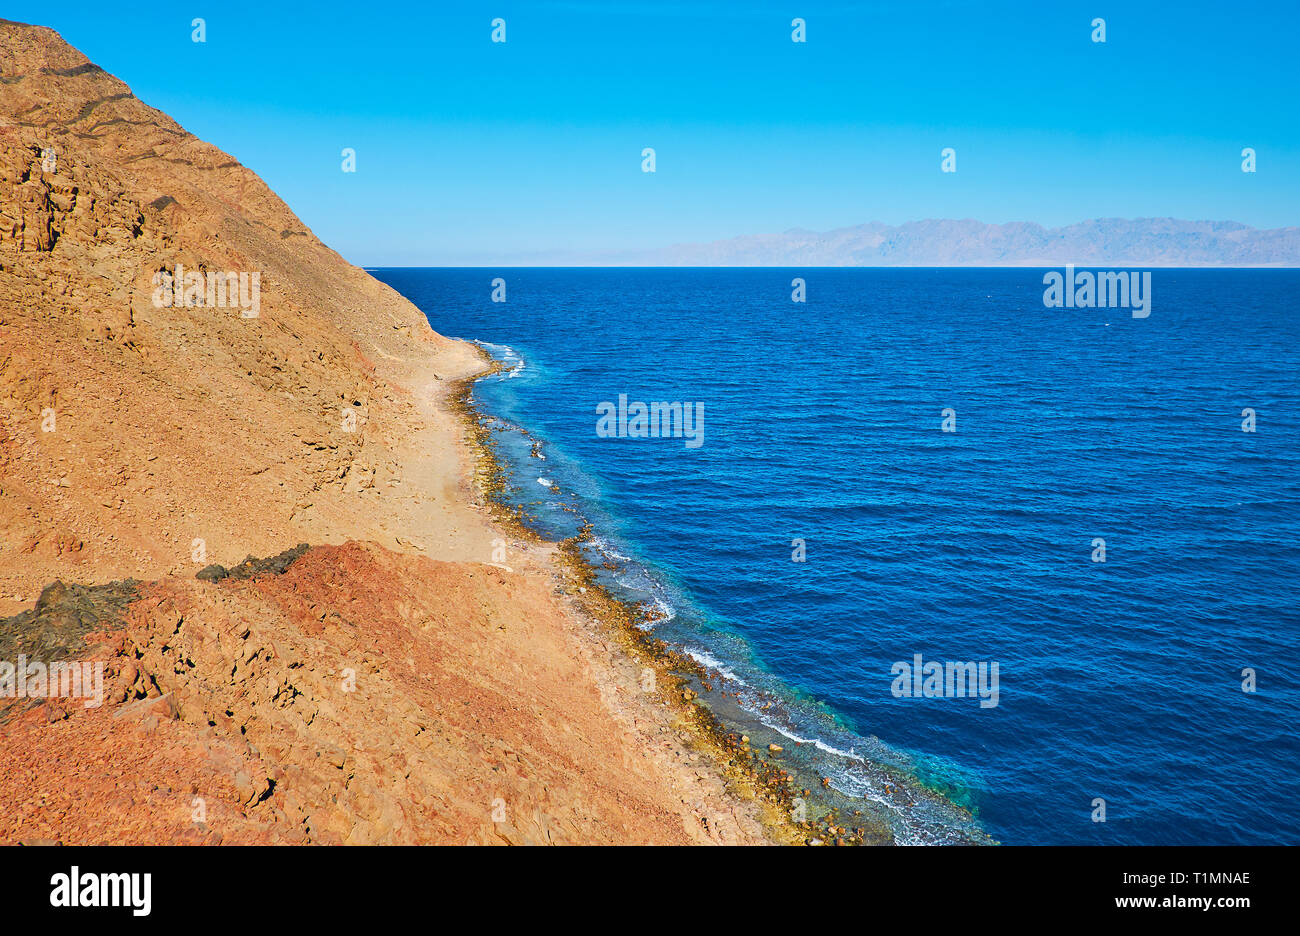 The scenic seascape of Aqaba gulf, located between the rocky desert shores of Egypt, Israel, Jordan and Saudi Arabia. Stock Photo